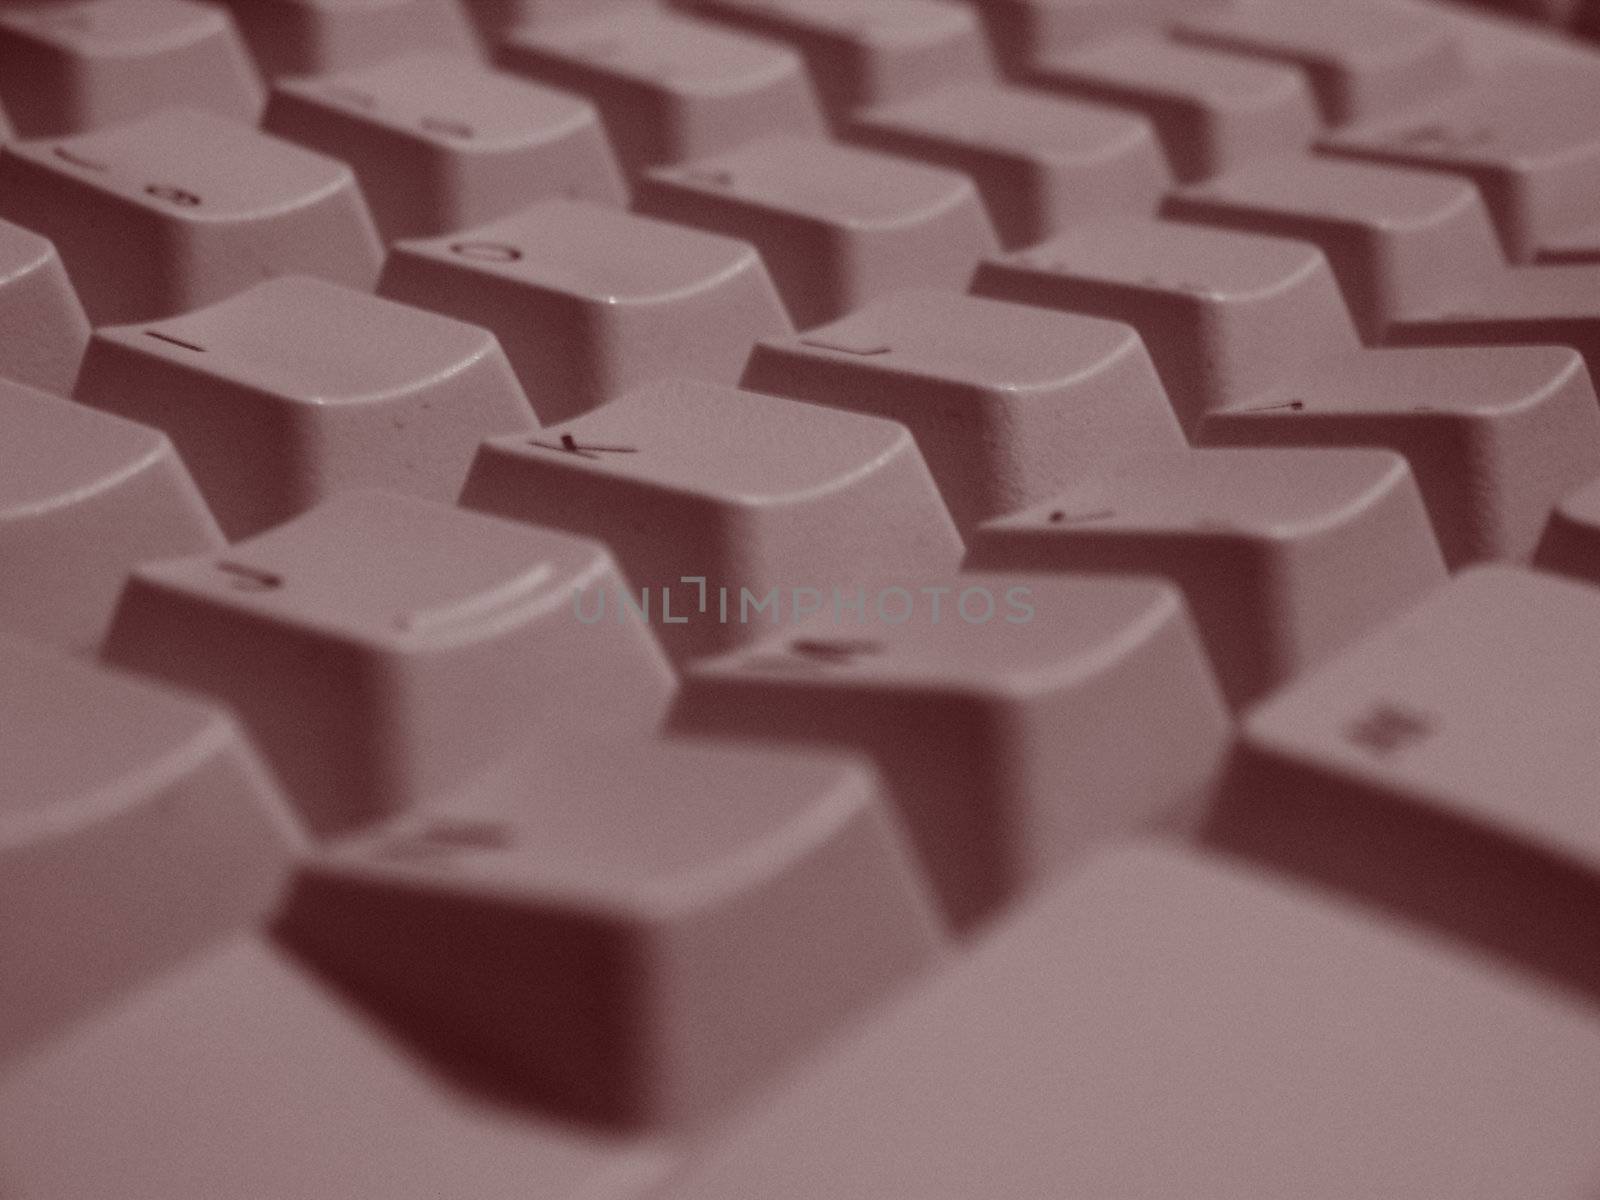 A close up shot of some keys on a desktop keyboard.